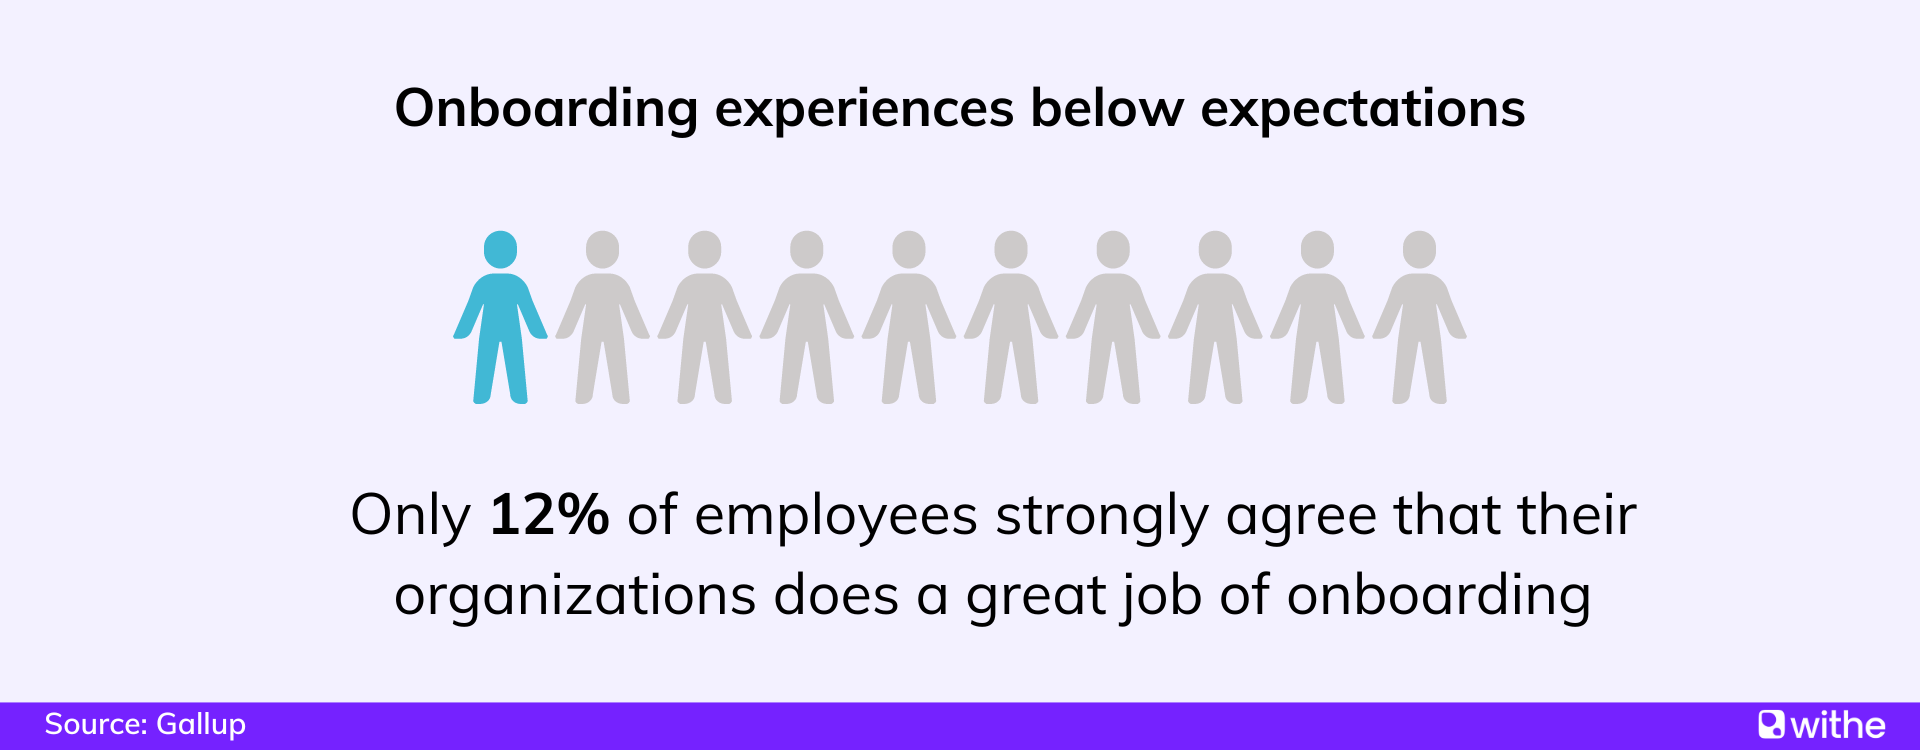 Employee onboarding statistics - Onboarding experiences below expectations